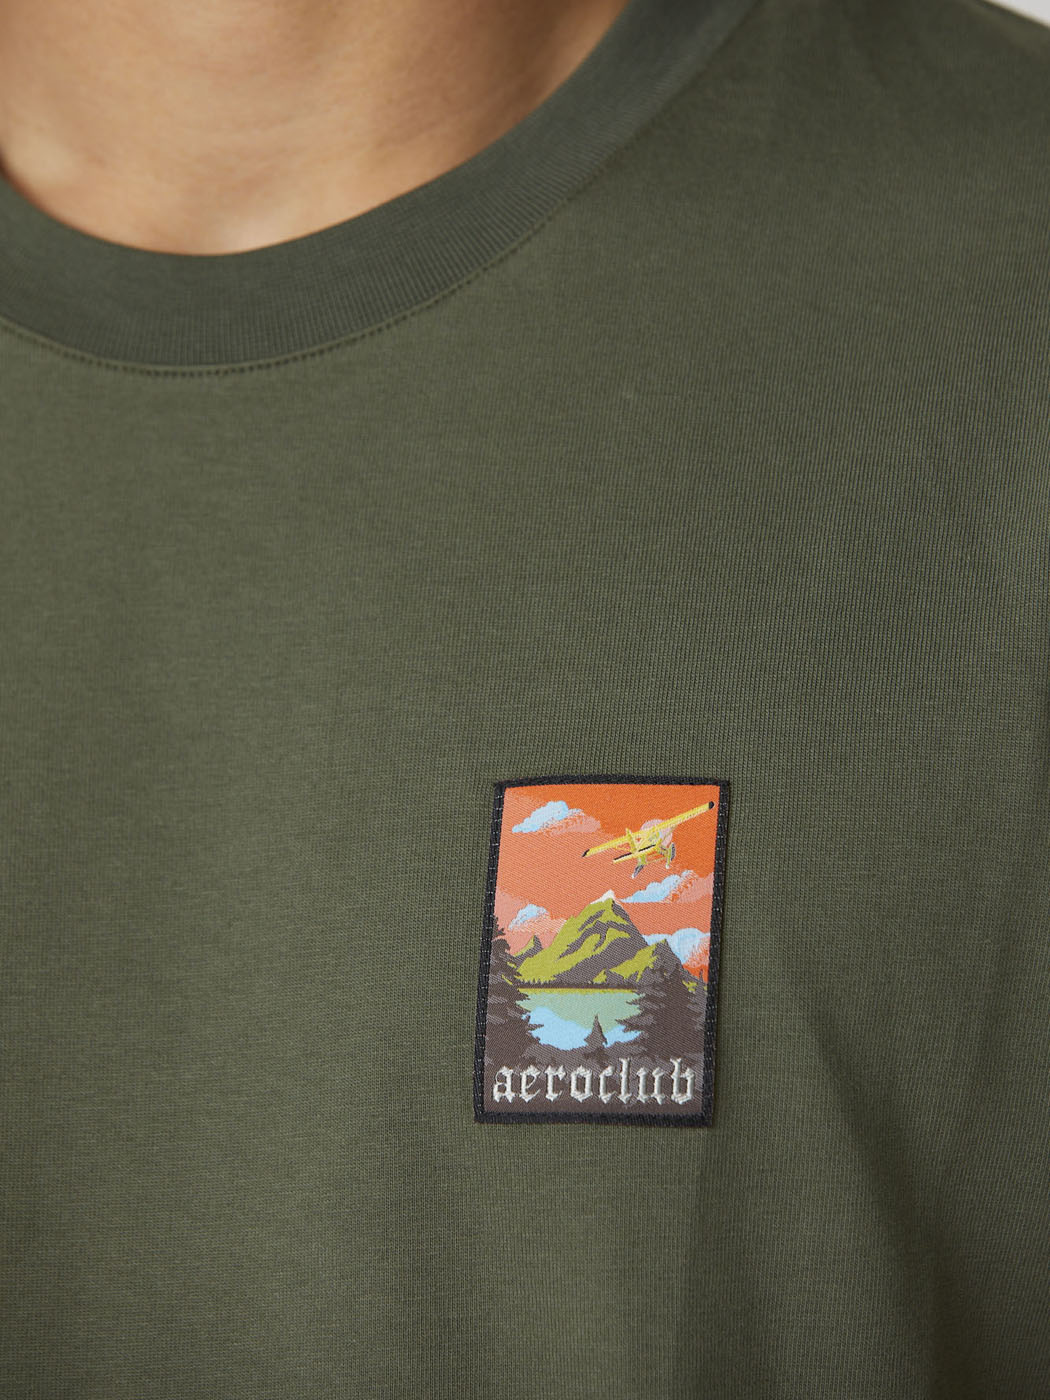 Gregale T-shirt patch Dolomiti